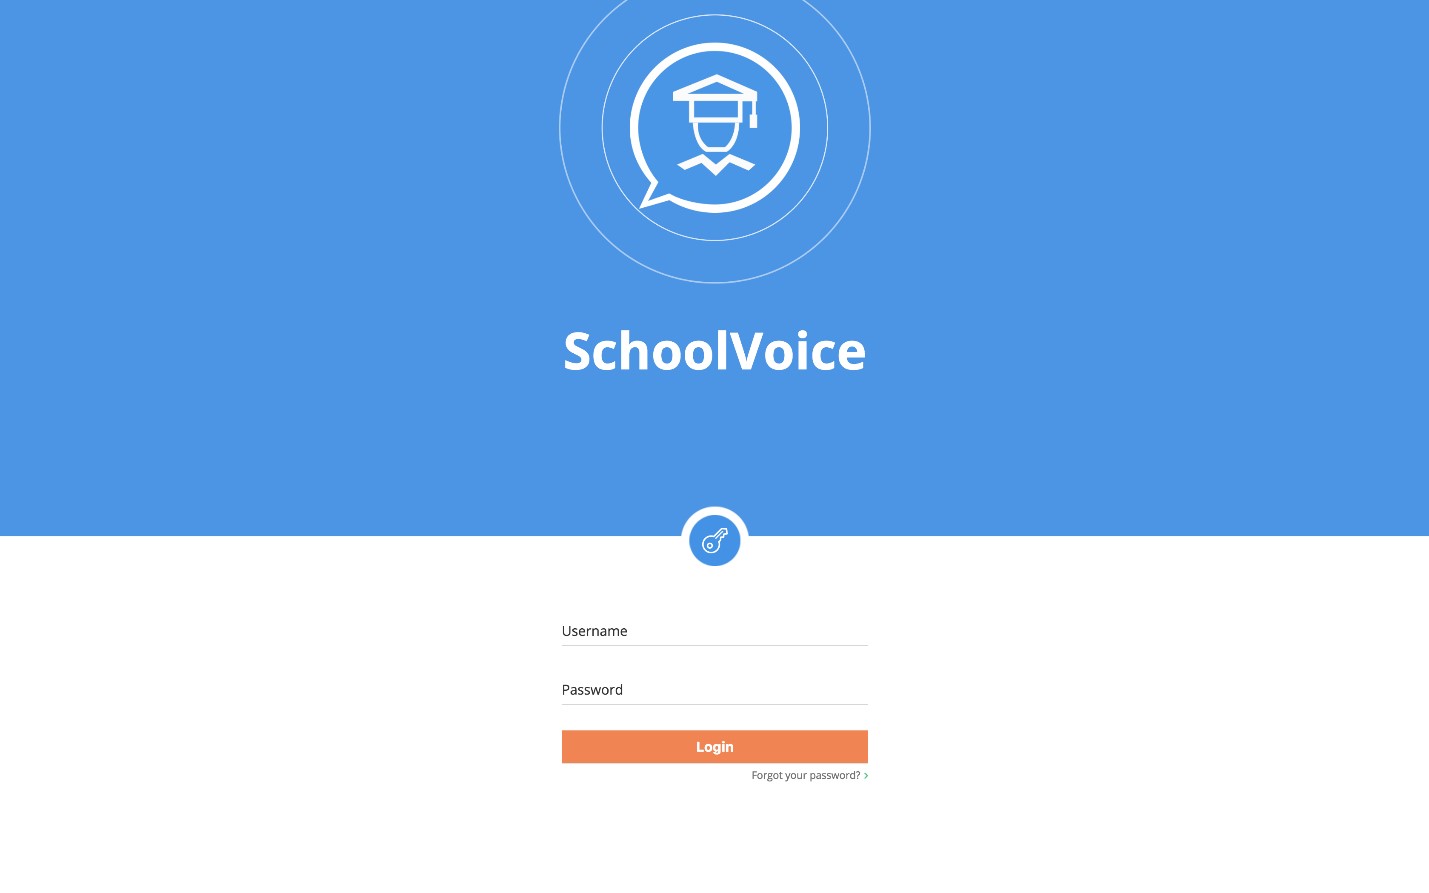 SchoolVoice administration web portal